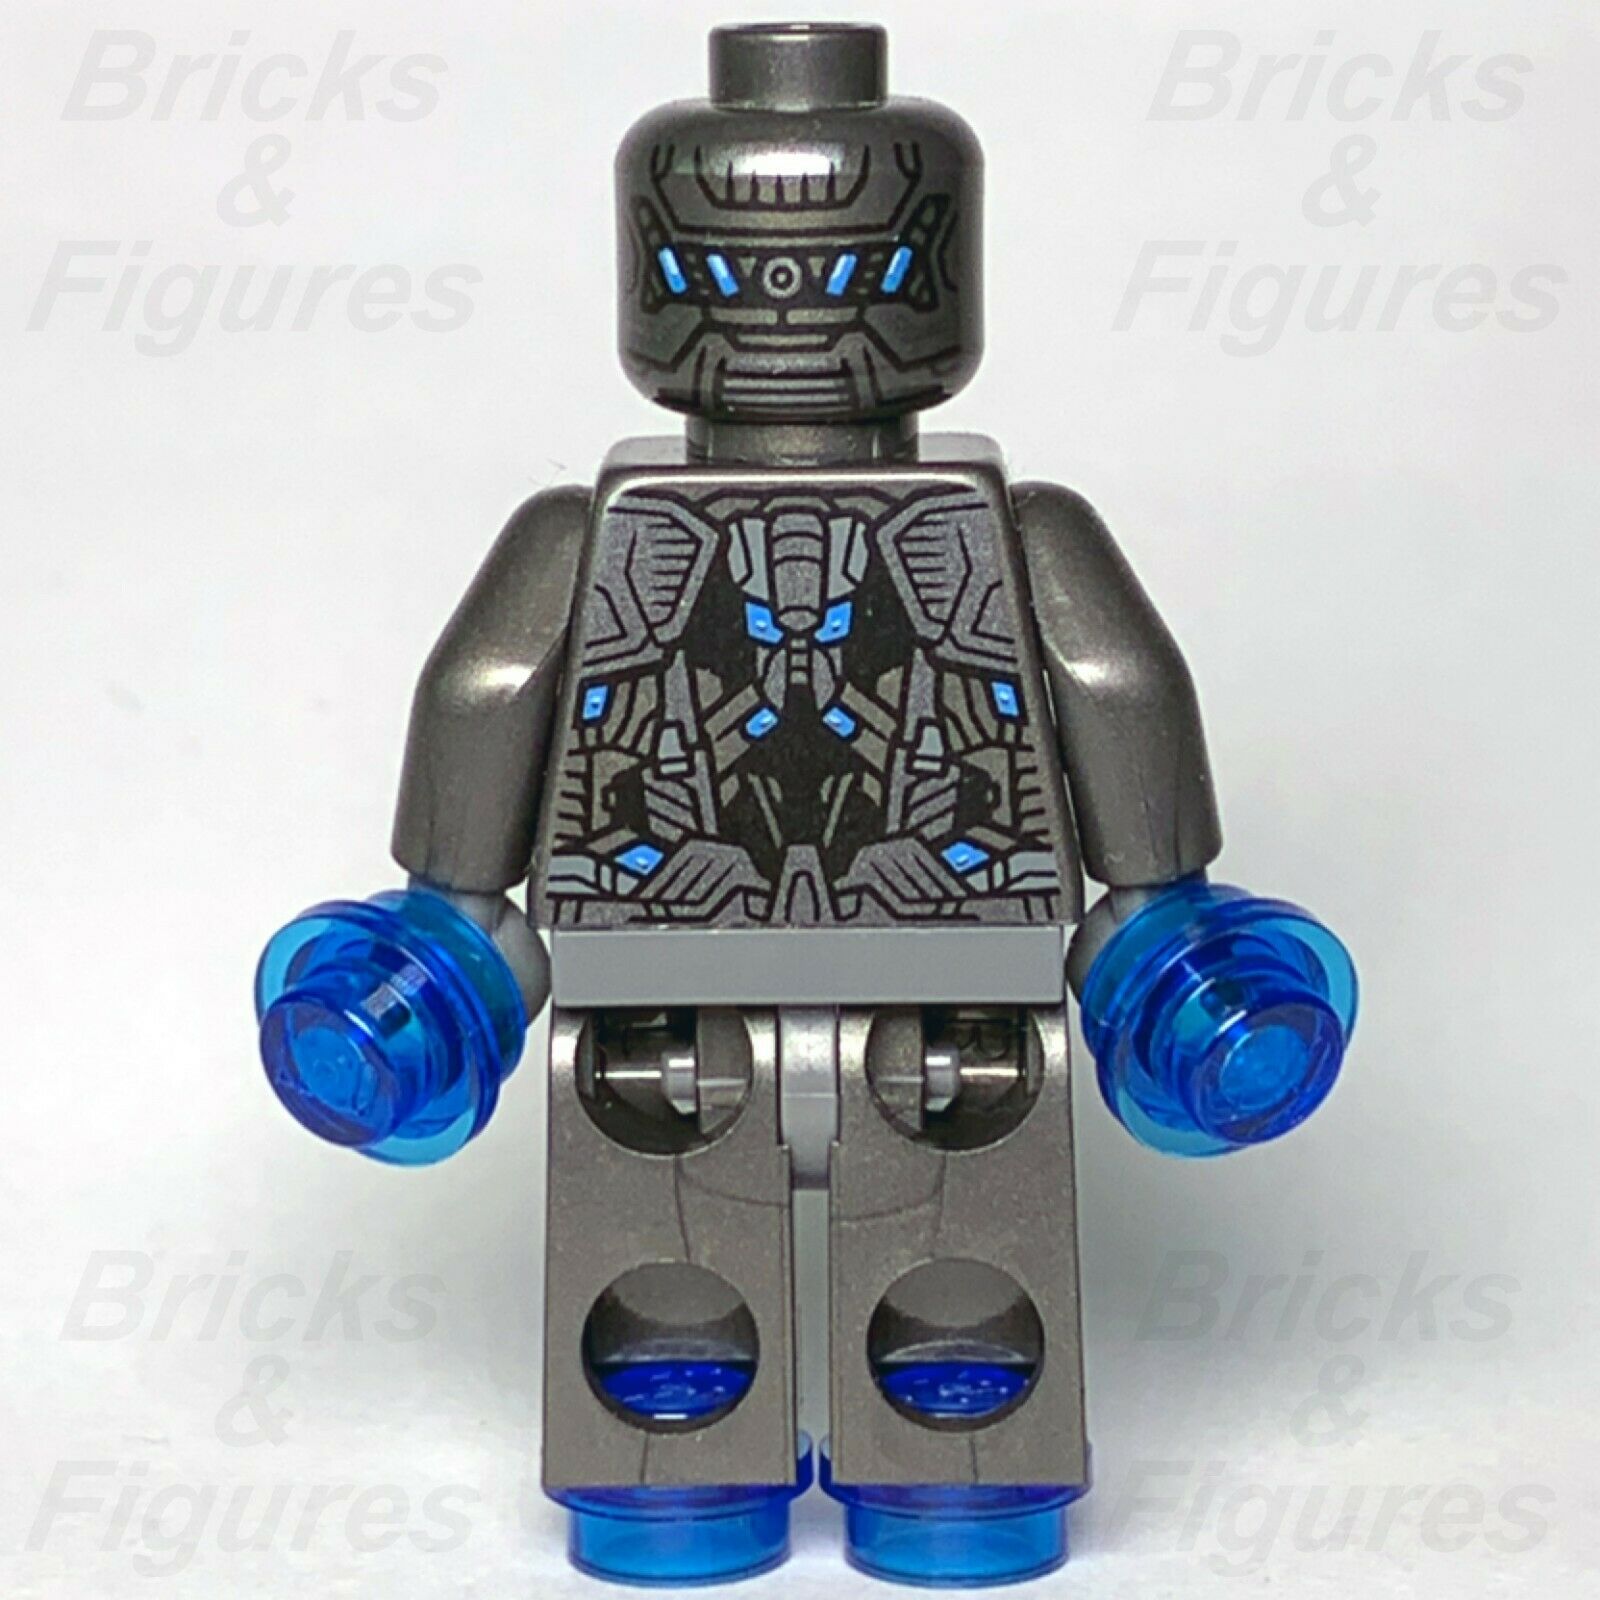 Marvel Super Heroes LEGO Ultron Sentry Avengers Age of Ultron Minifigure 76029 - Bricks & Figures